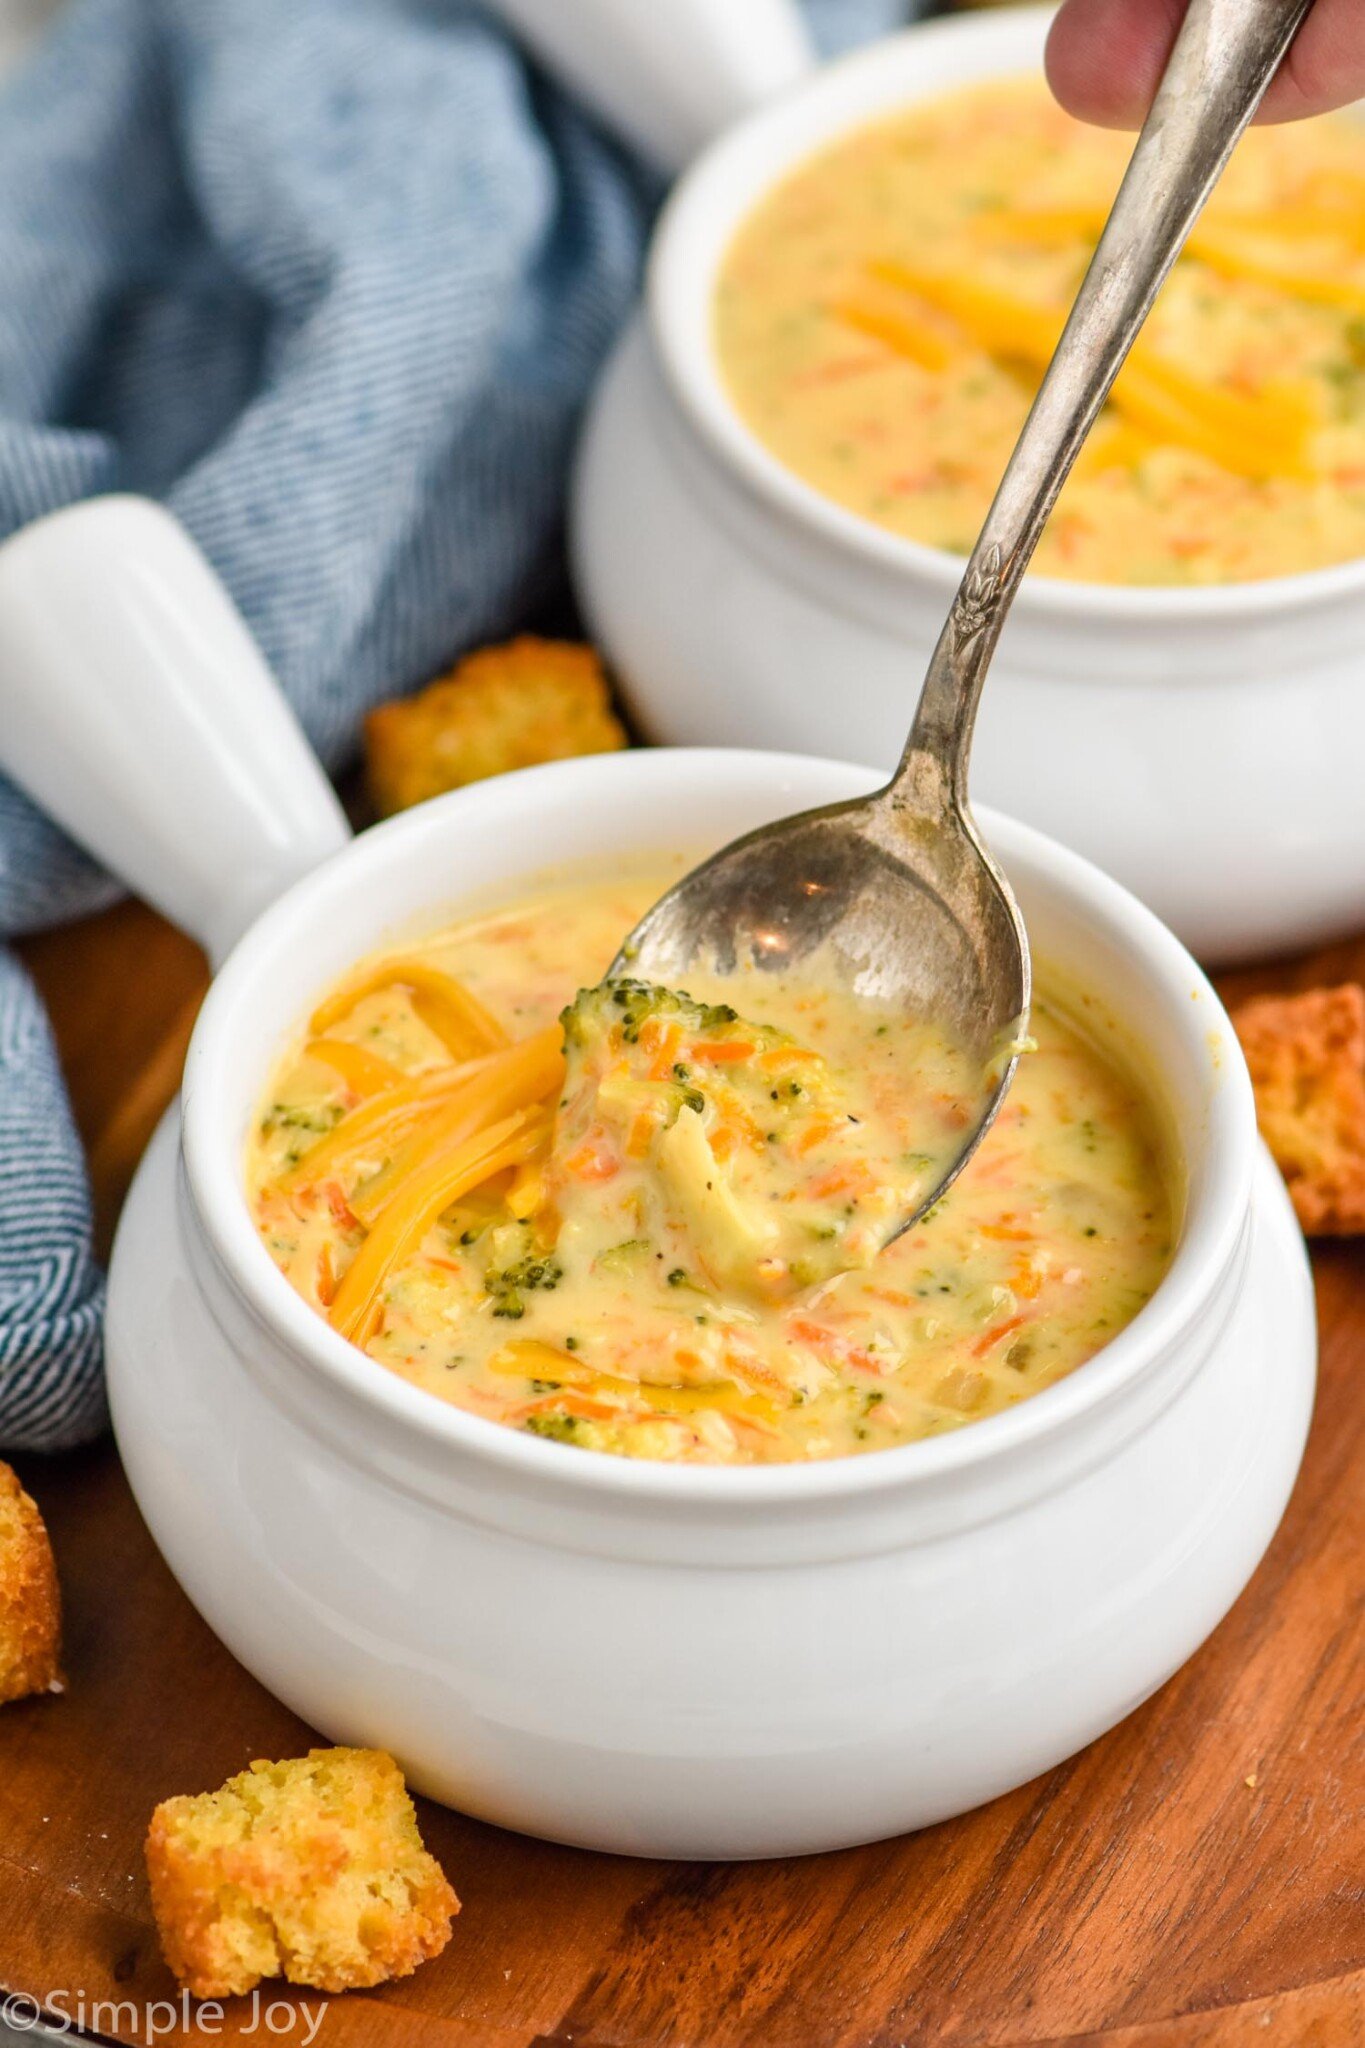 Instant Pot Broccoli Cheddar Soup - Simple Joy